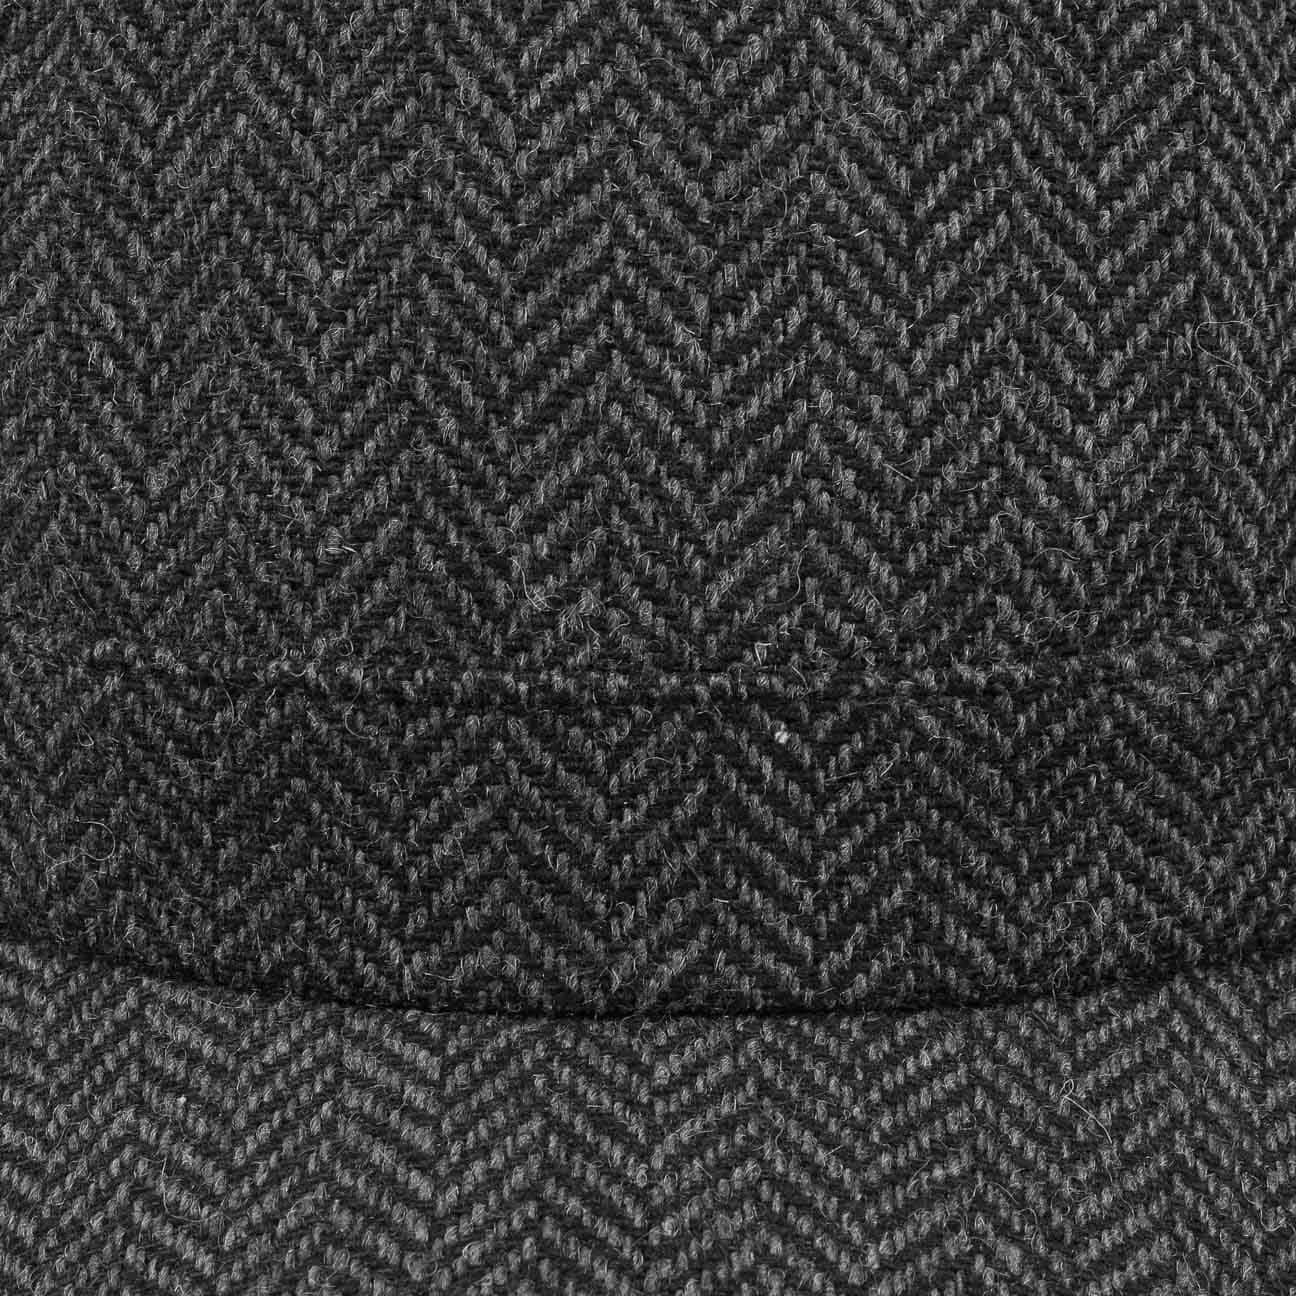 schwarz-grau Lipodo Cap mit (1-St) Army Schirm Cap